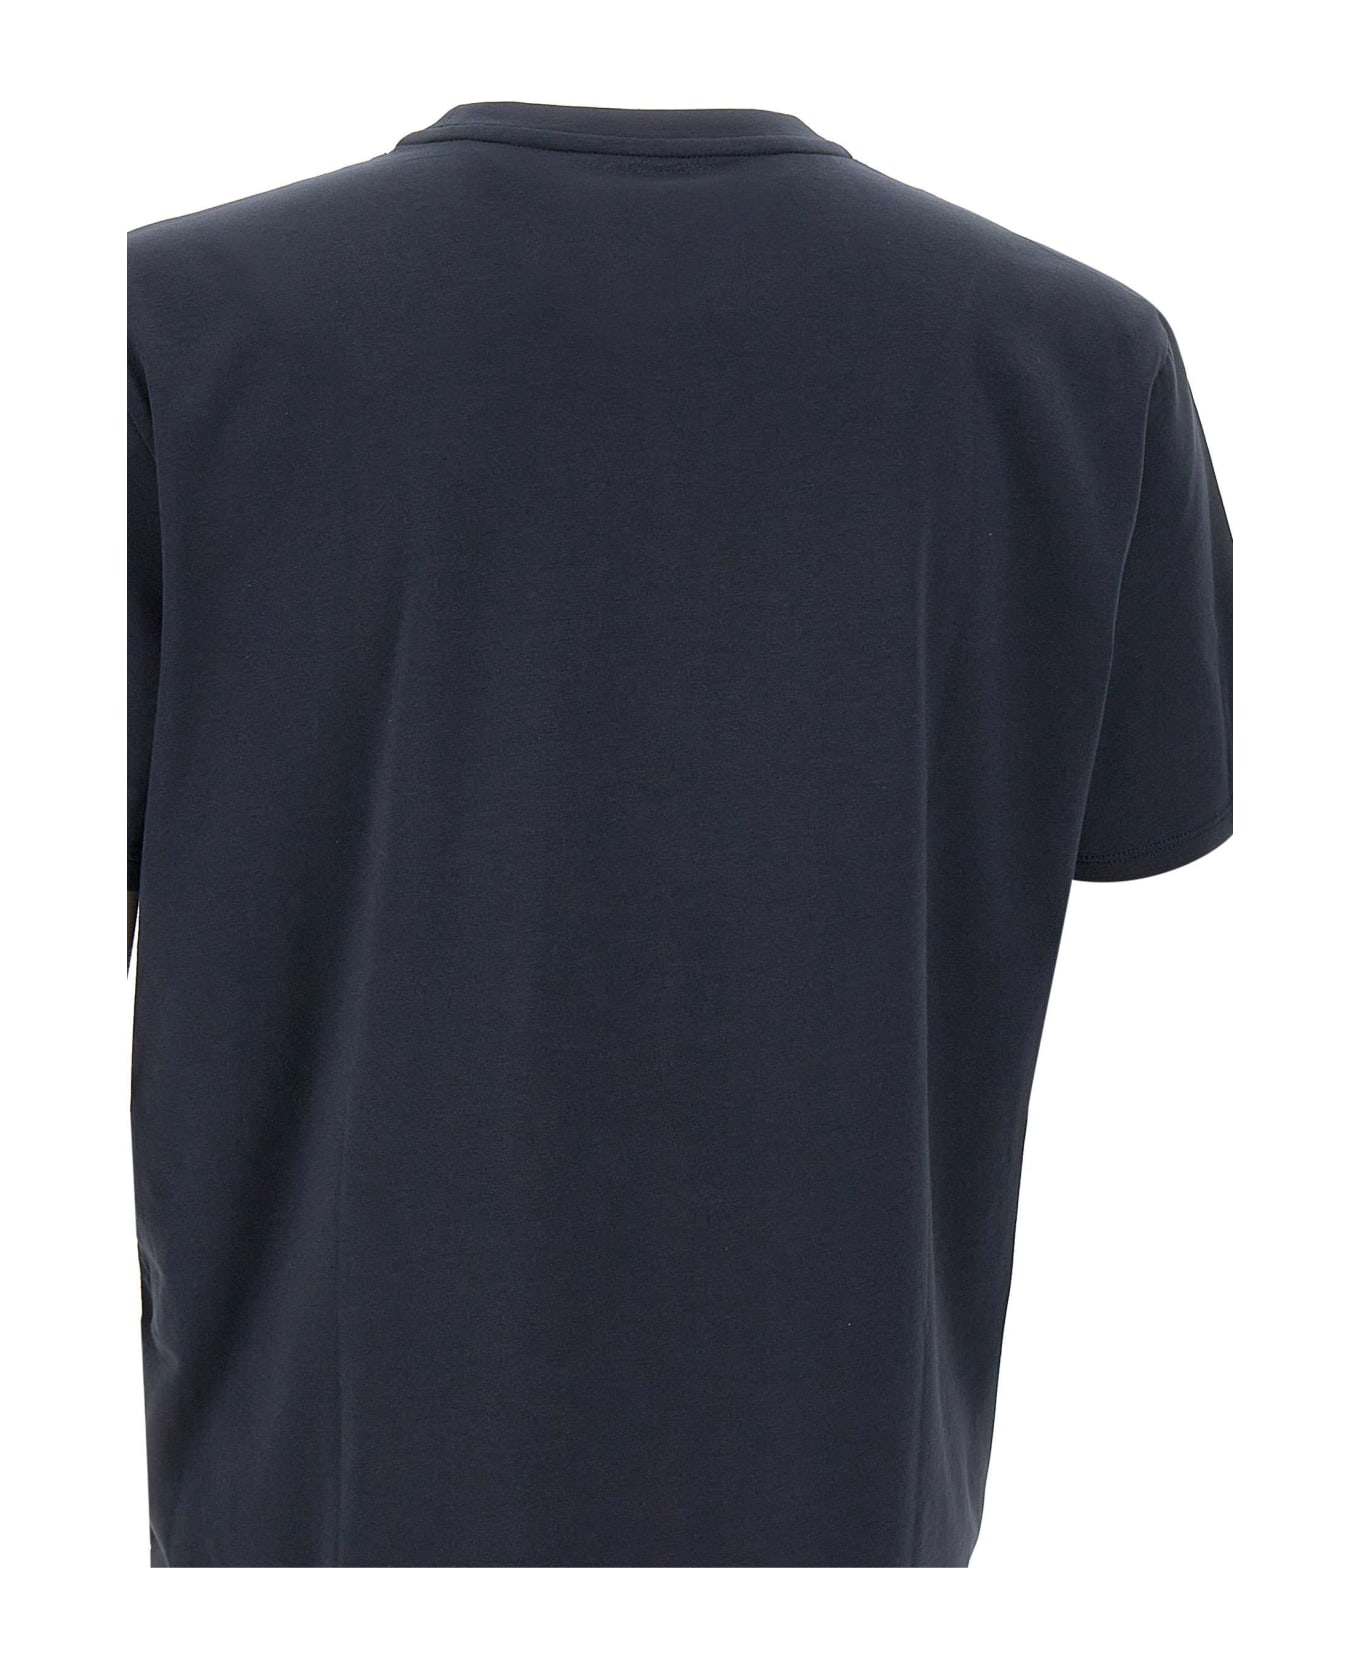 RRD - Roberto Ricci Design 'revo Shirty' T-shirt RRD - Roberto Ricci Design